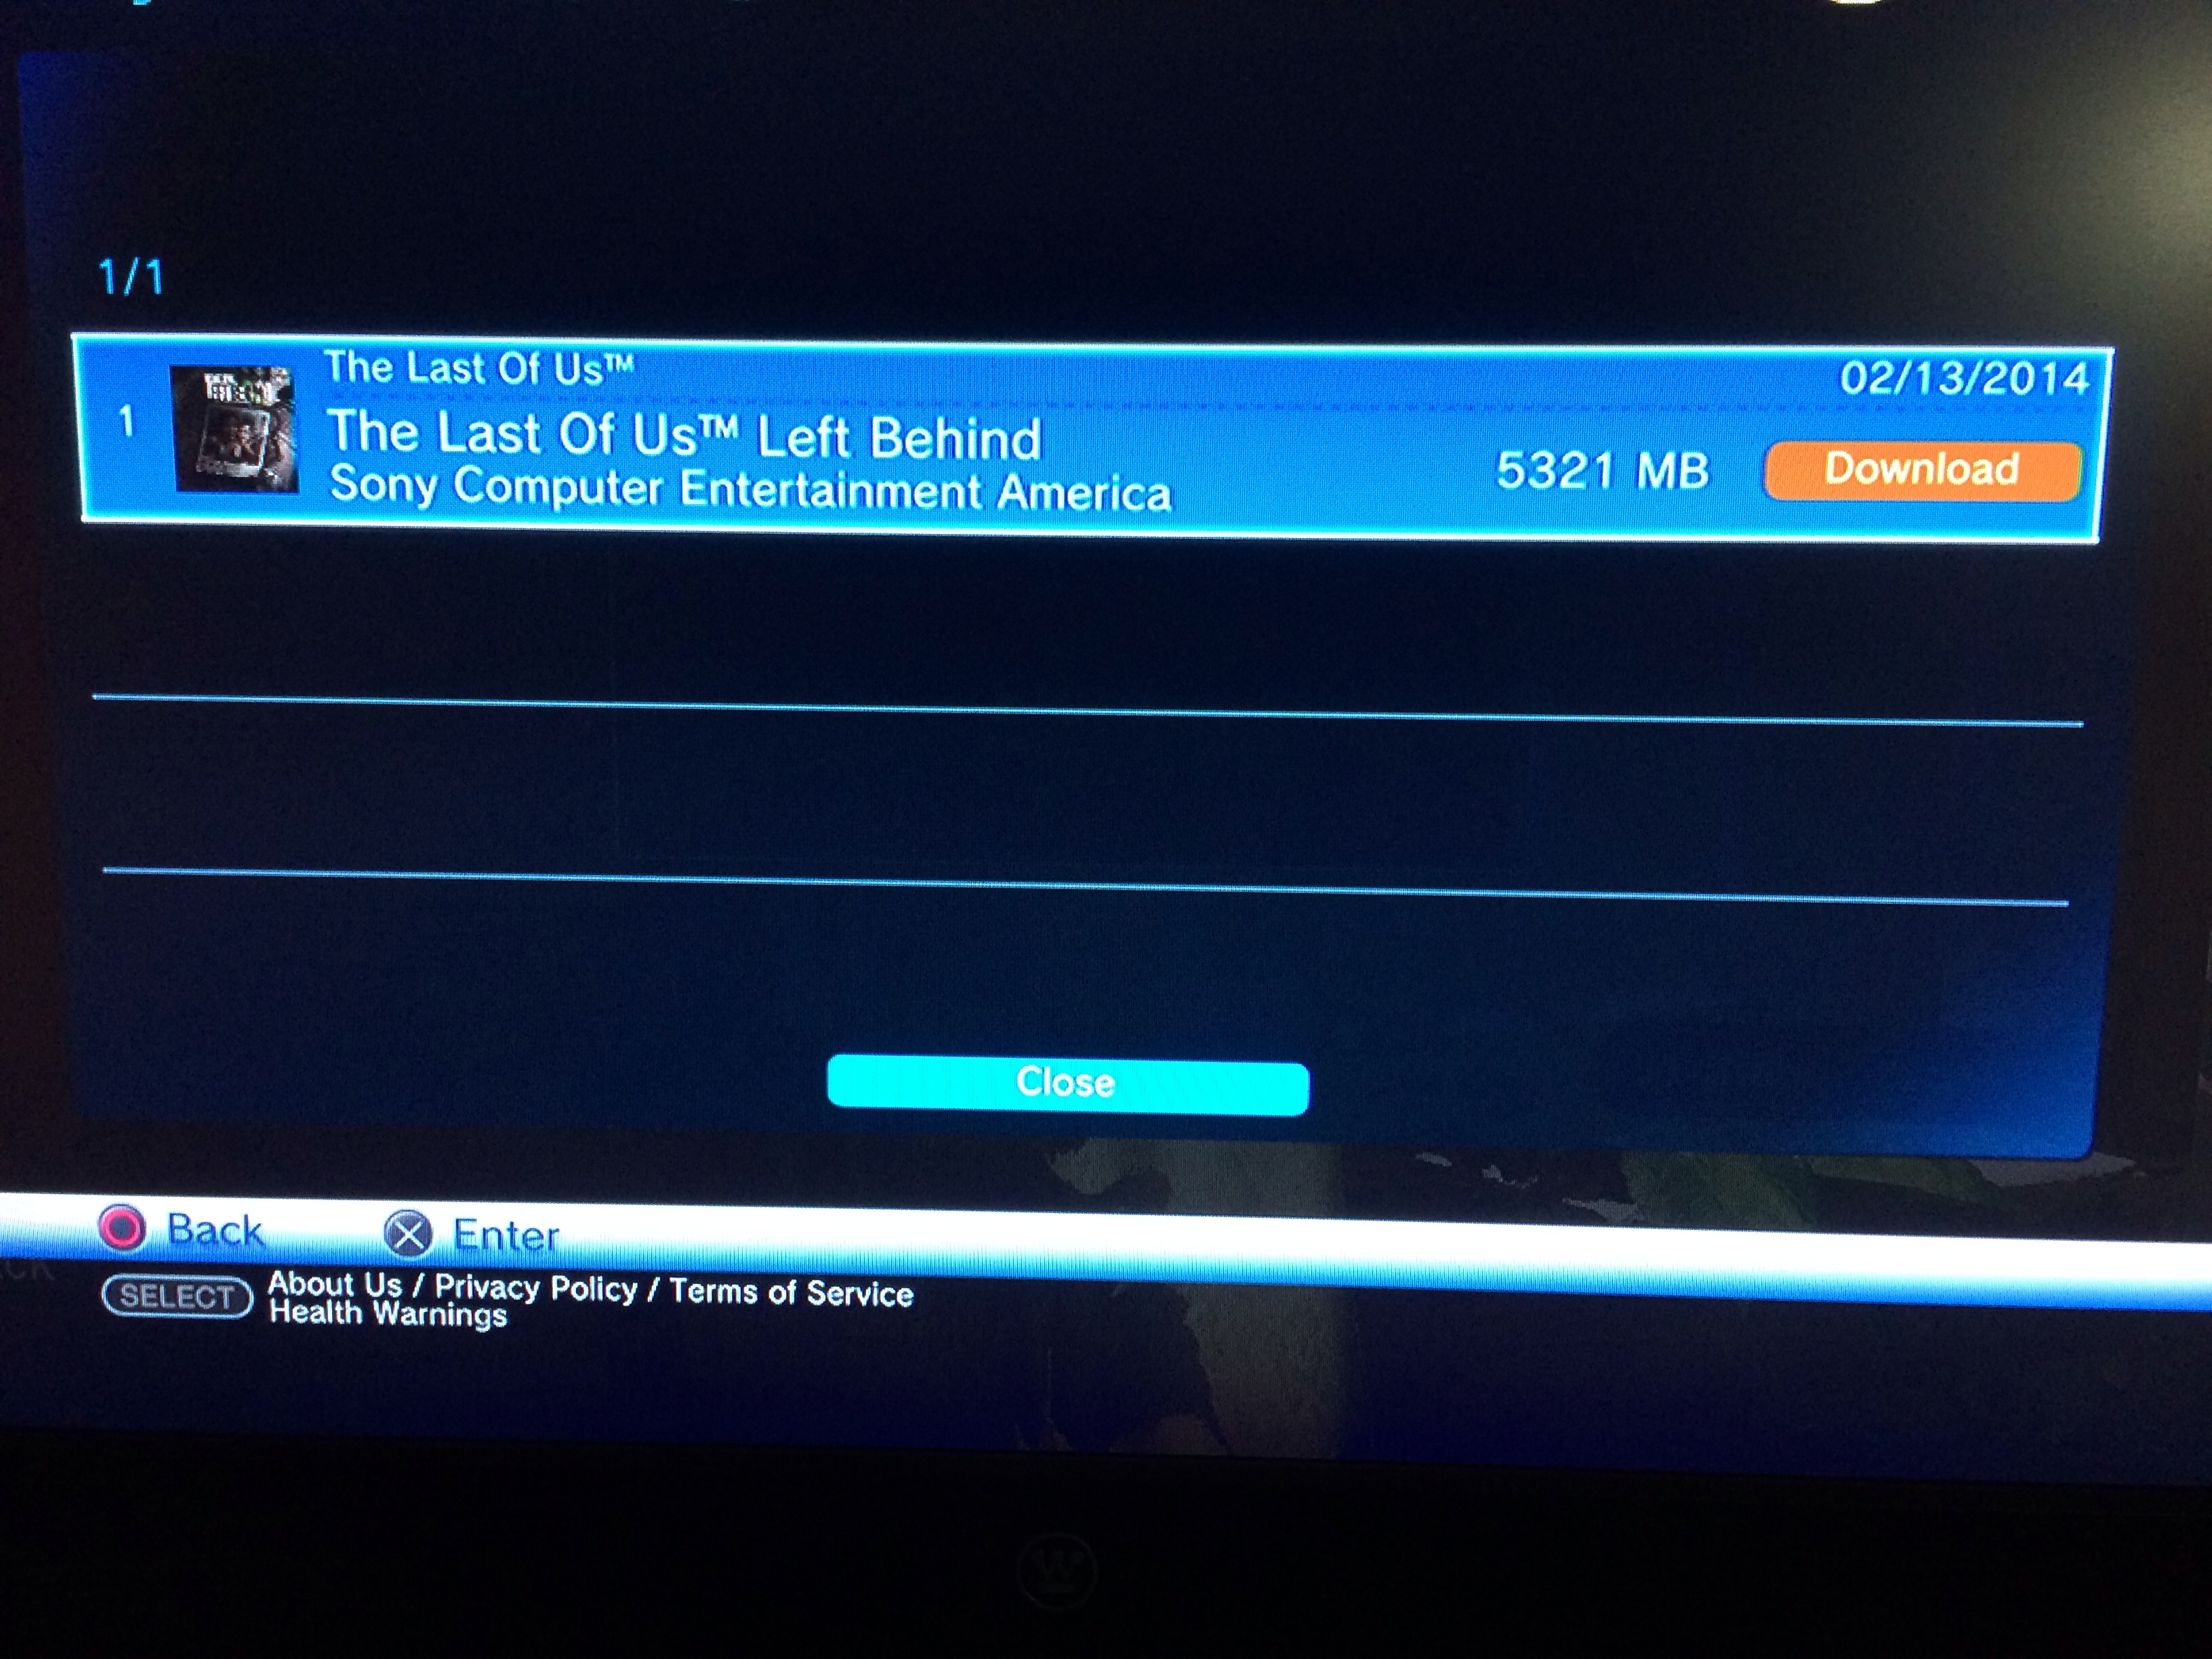 Saiba como baixar o DLC de The Last of Us: Left Behind no PS3 e PS4